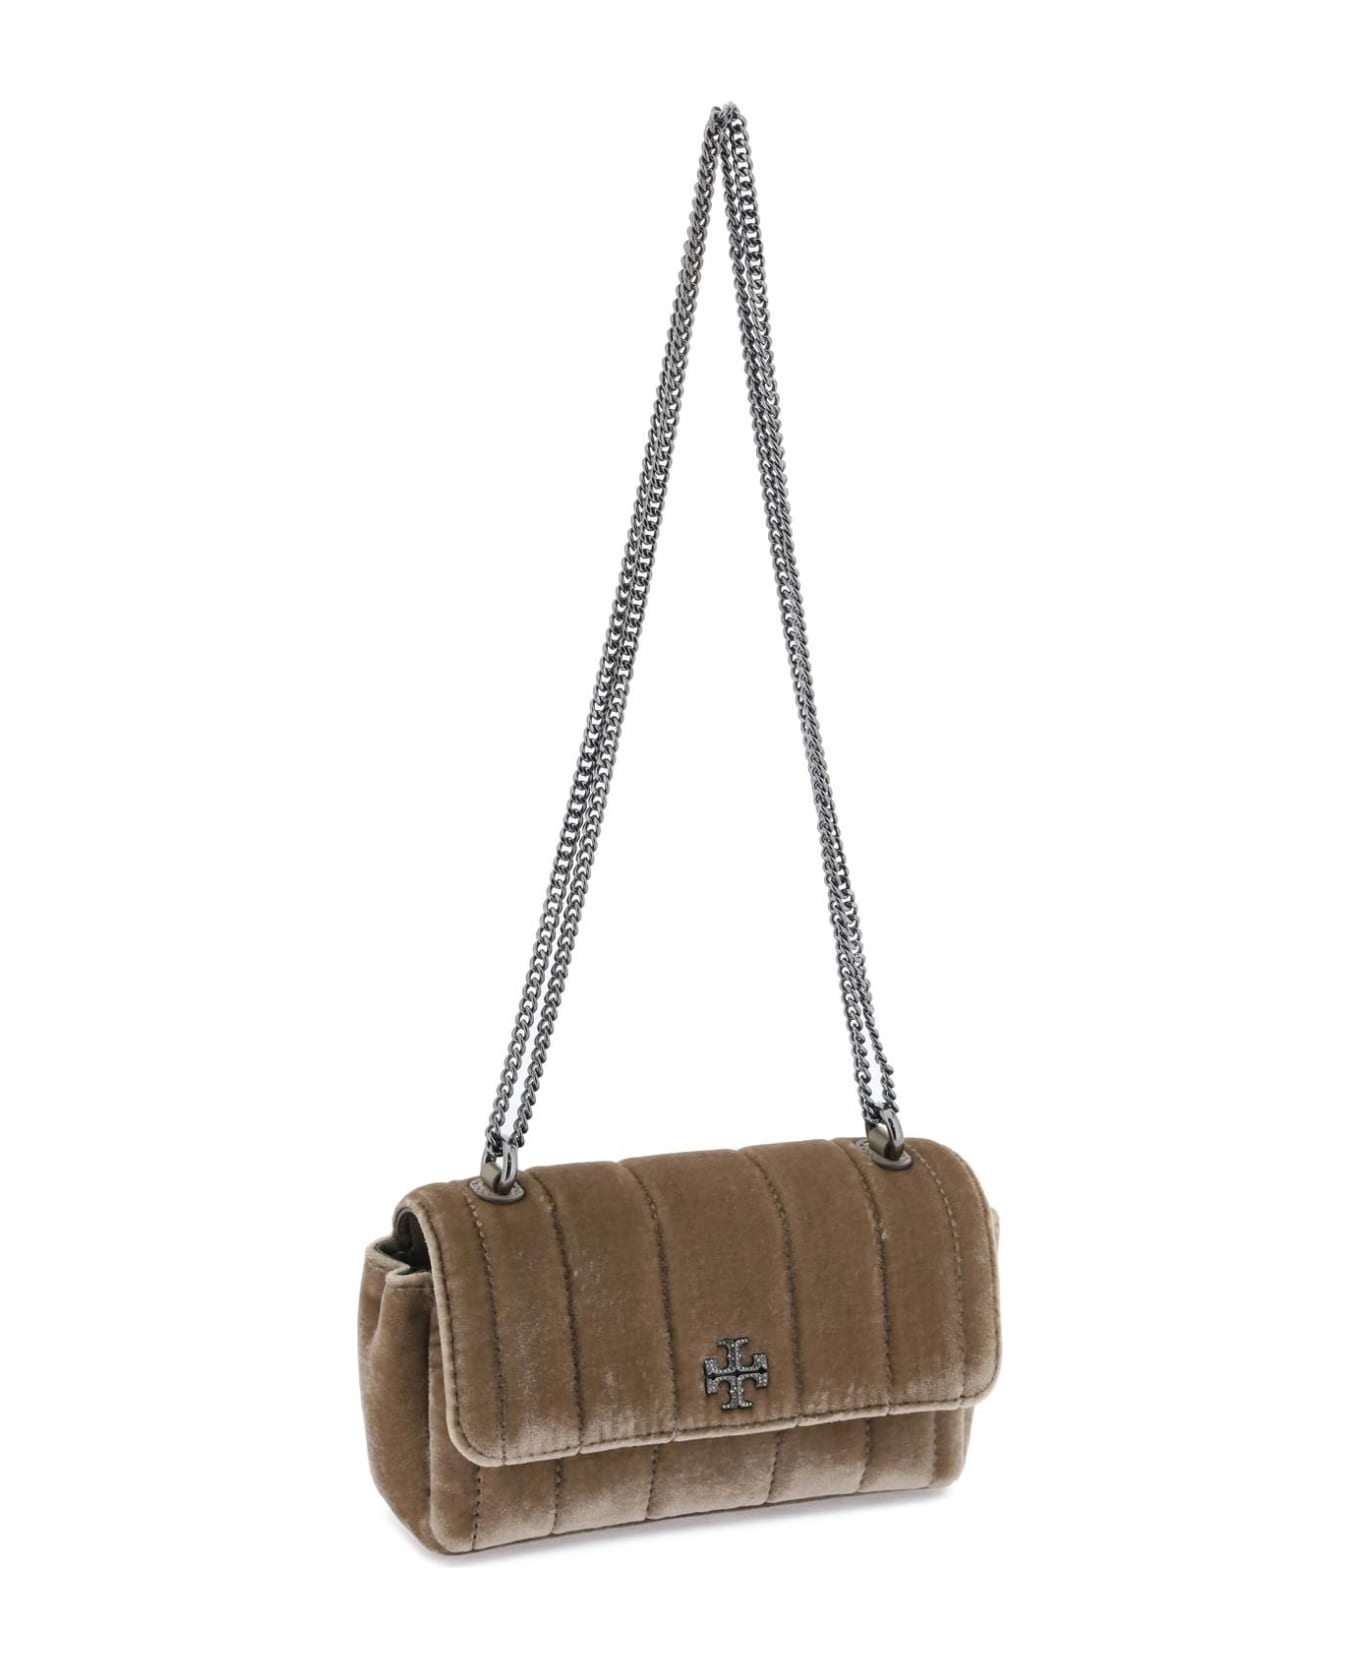 Tory Burch Kira Mini Shoulder Bag - CLASSIC TAUPE (Beige)